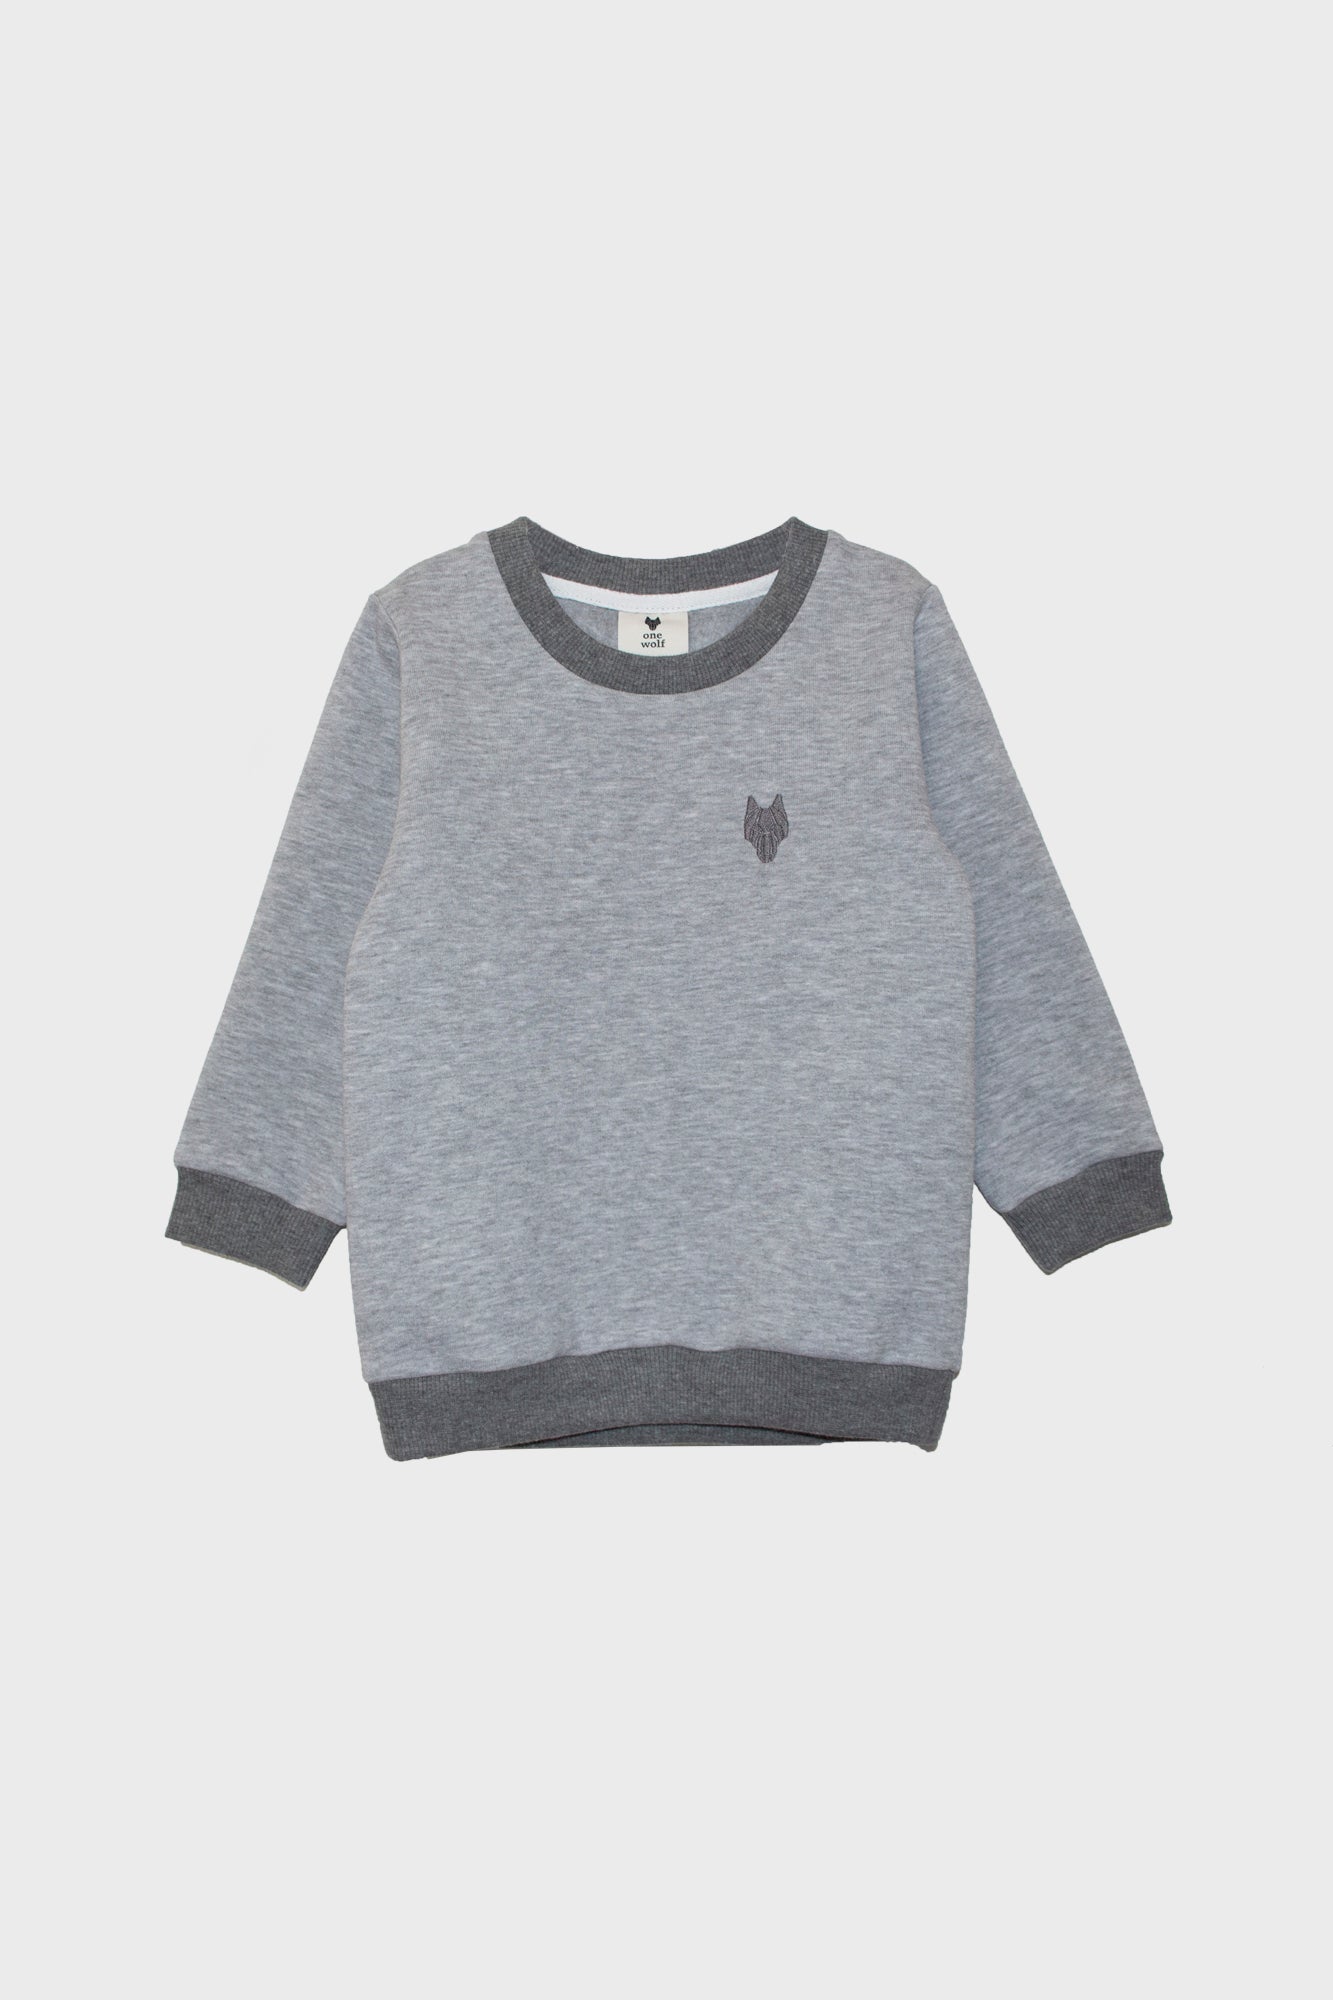 Kid’s One Wolf sweater, grey/dark grey logo